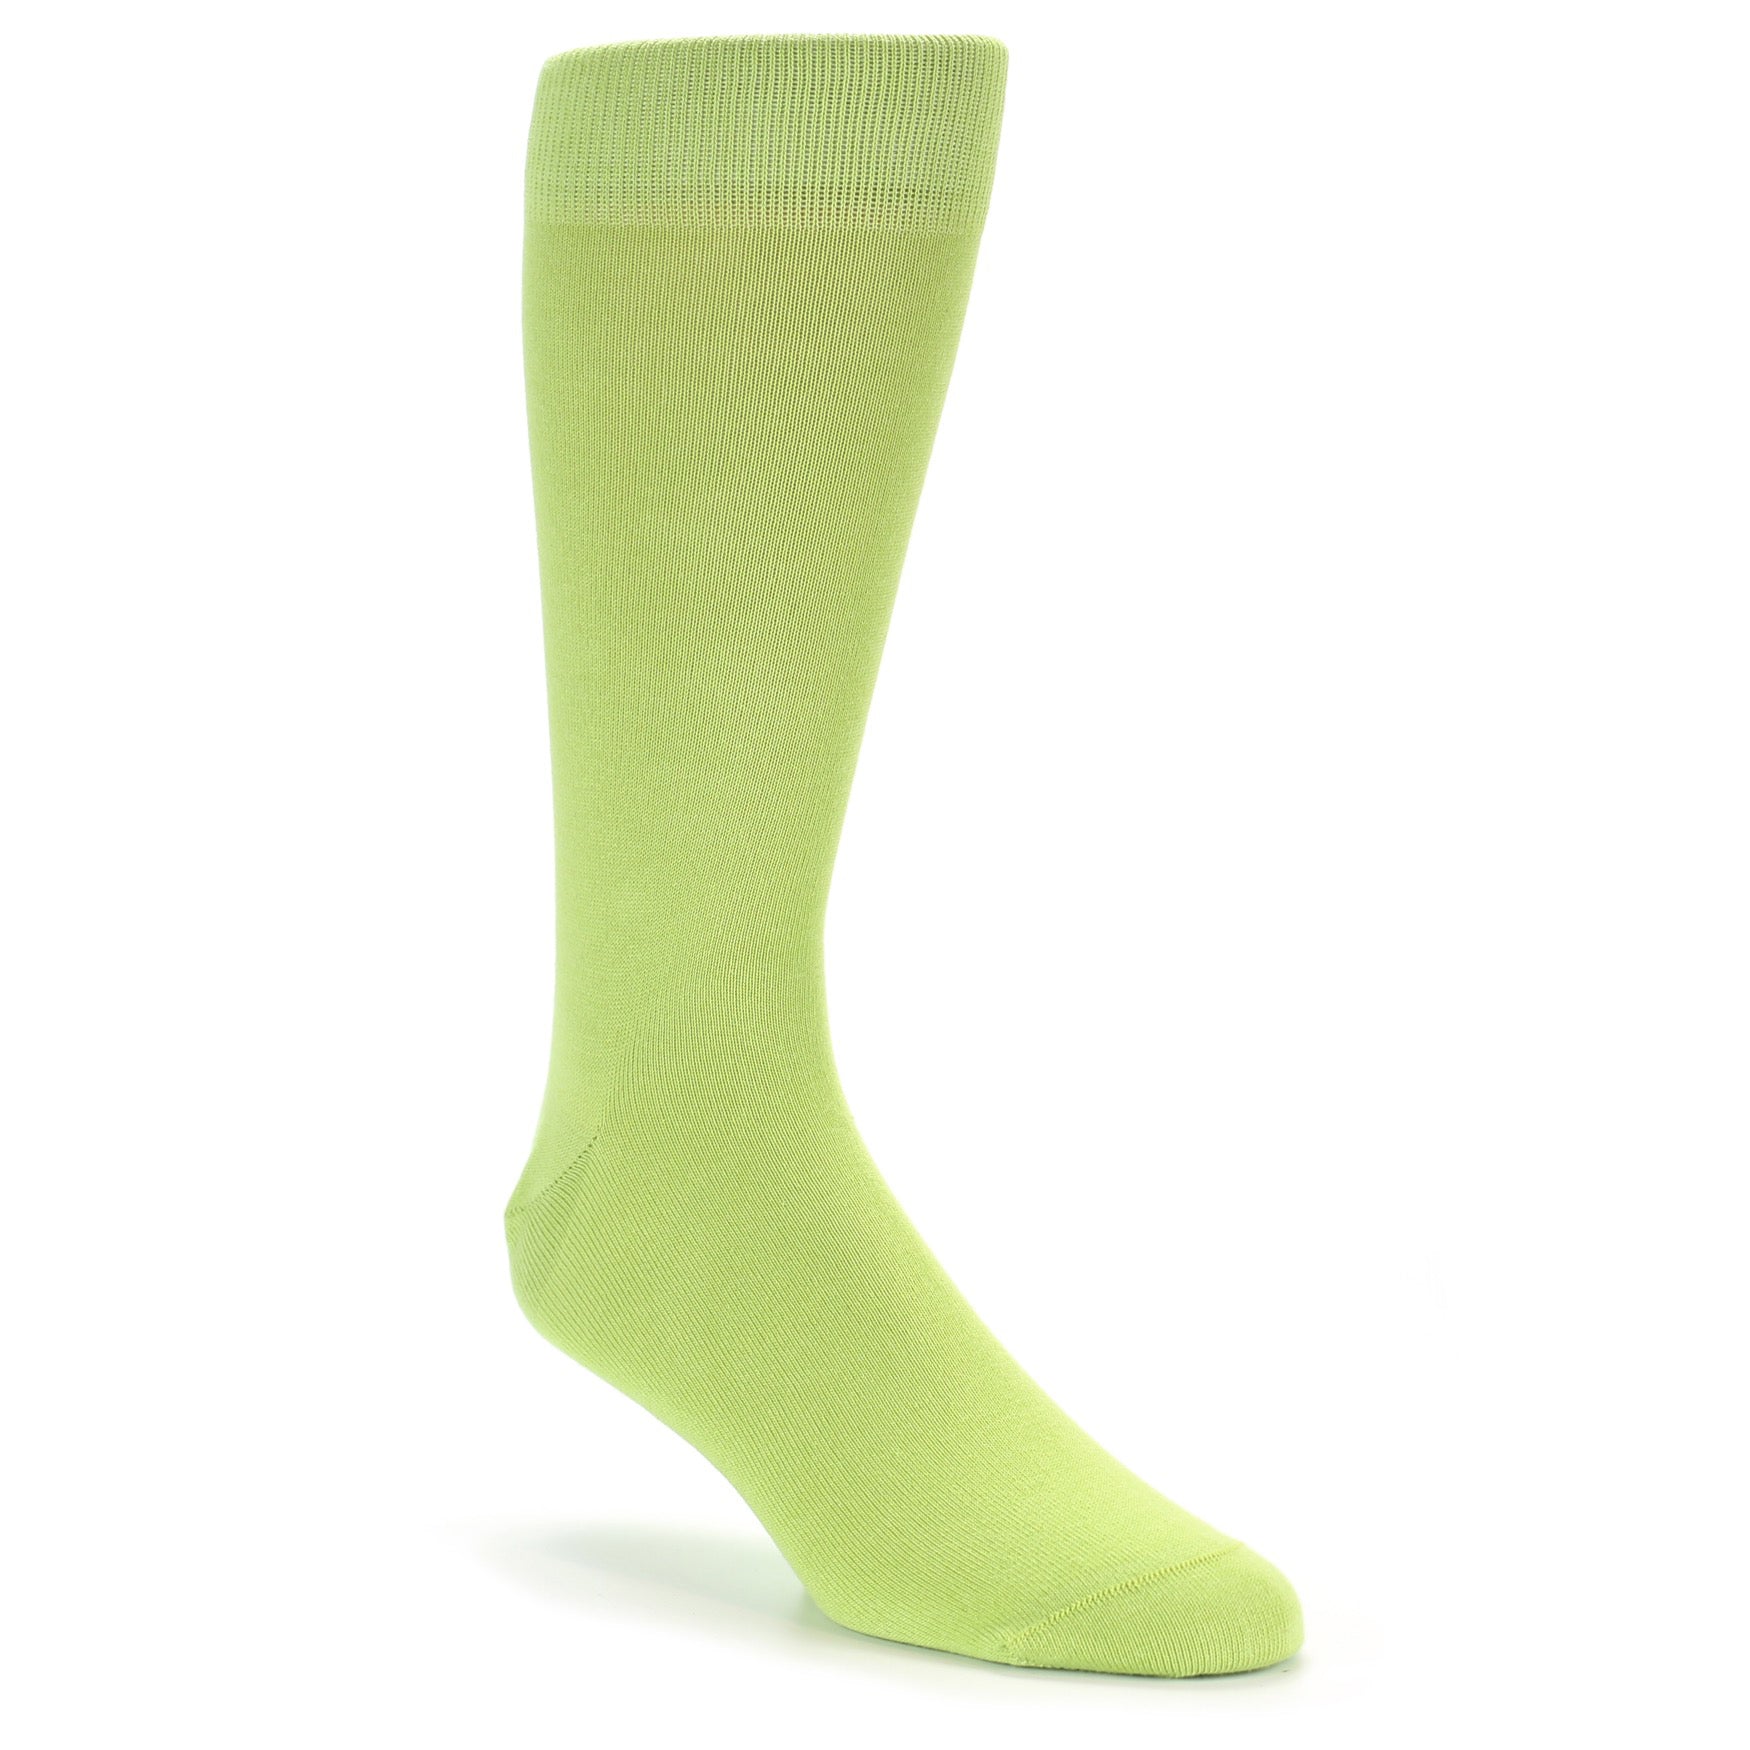 Lime Green Solid Color Socks - Men's Dress Socks